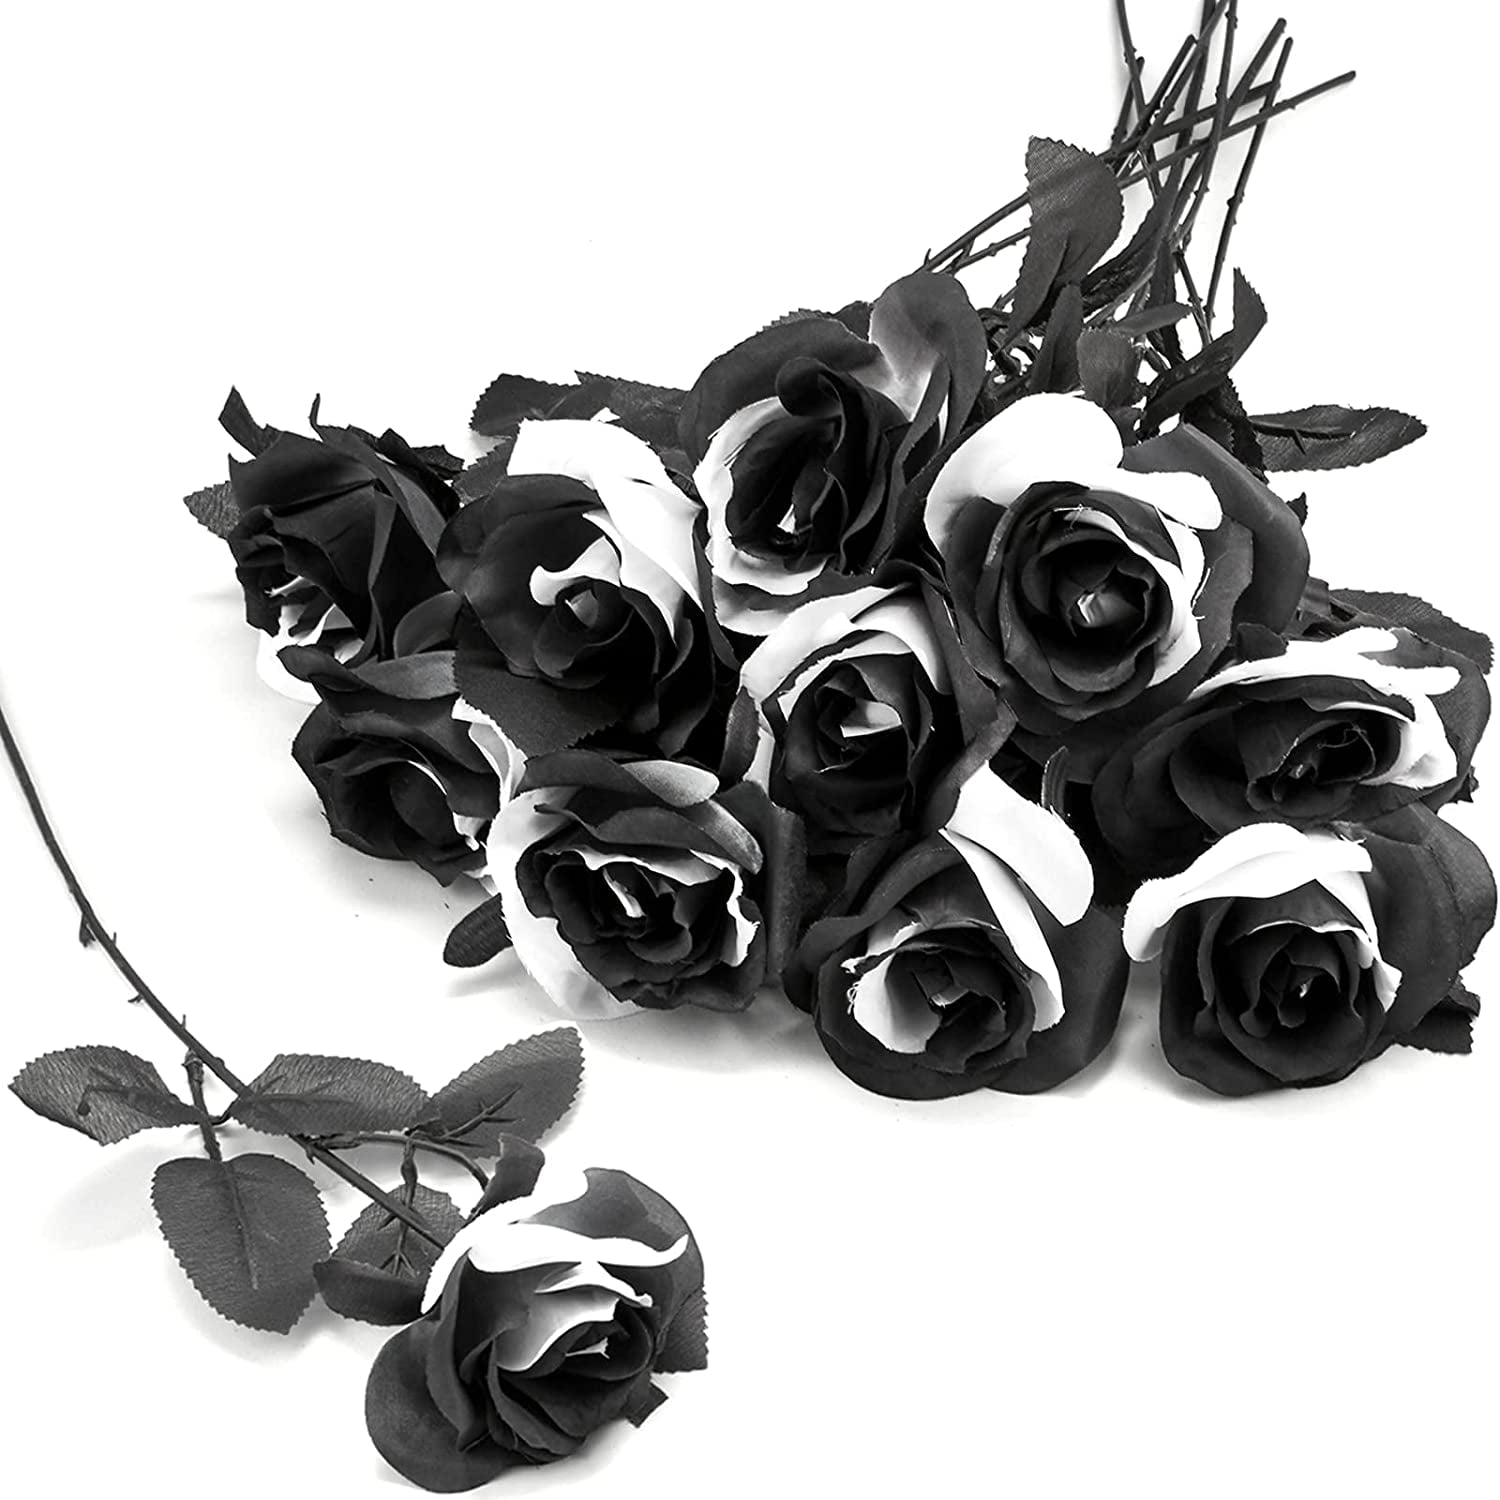 Kisflower 12pcs Halloween Decorations Black Flowers, Artificial Black Roses, Realistic Single Stem Flowers Silk Fake Rose Bouquet for Wedding Party